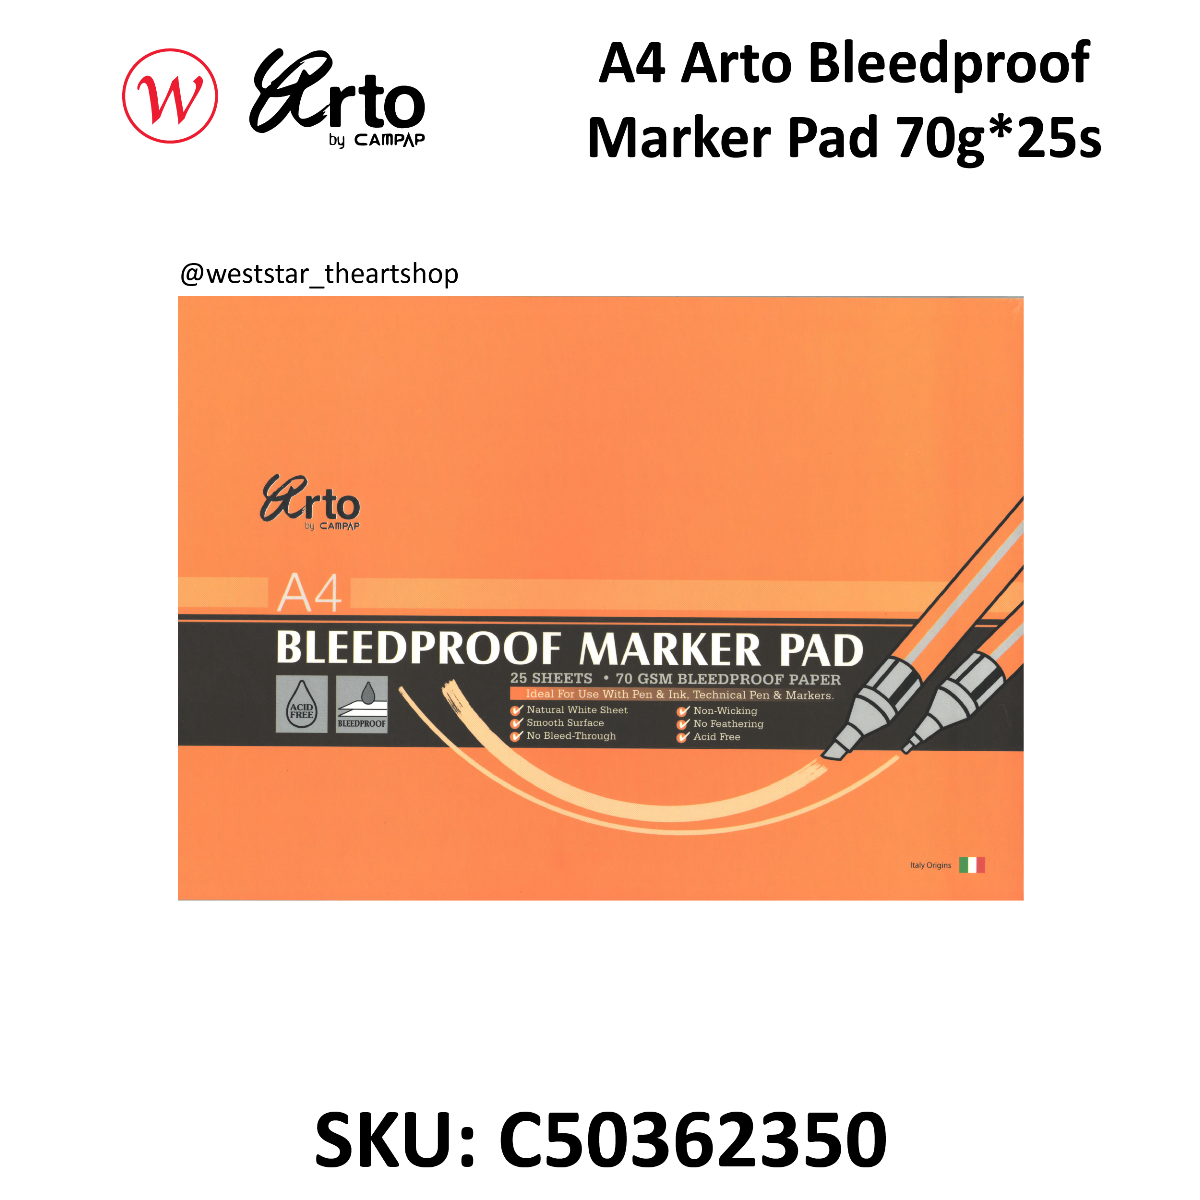 A4 Arto Bleedproof Marker Pad 70g*25s